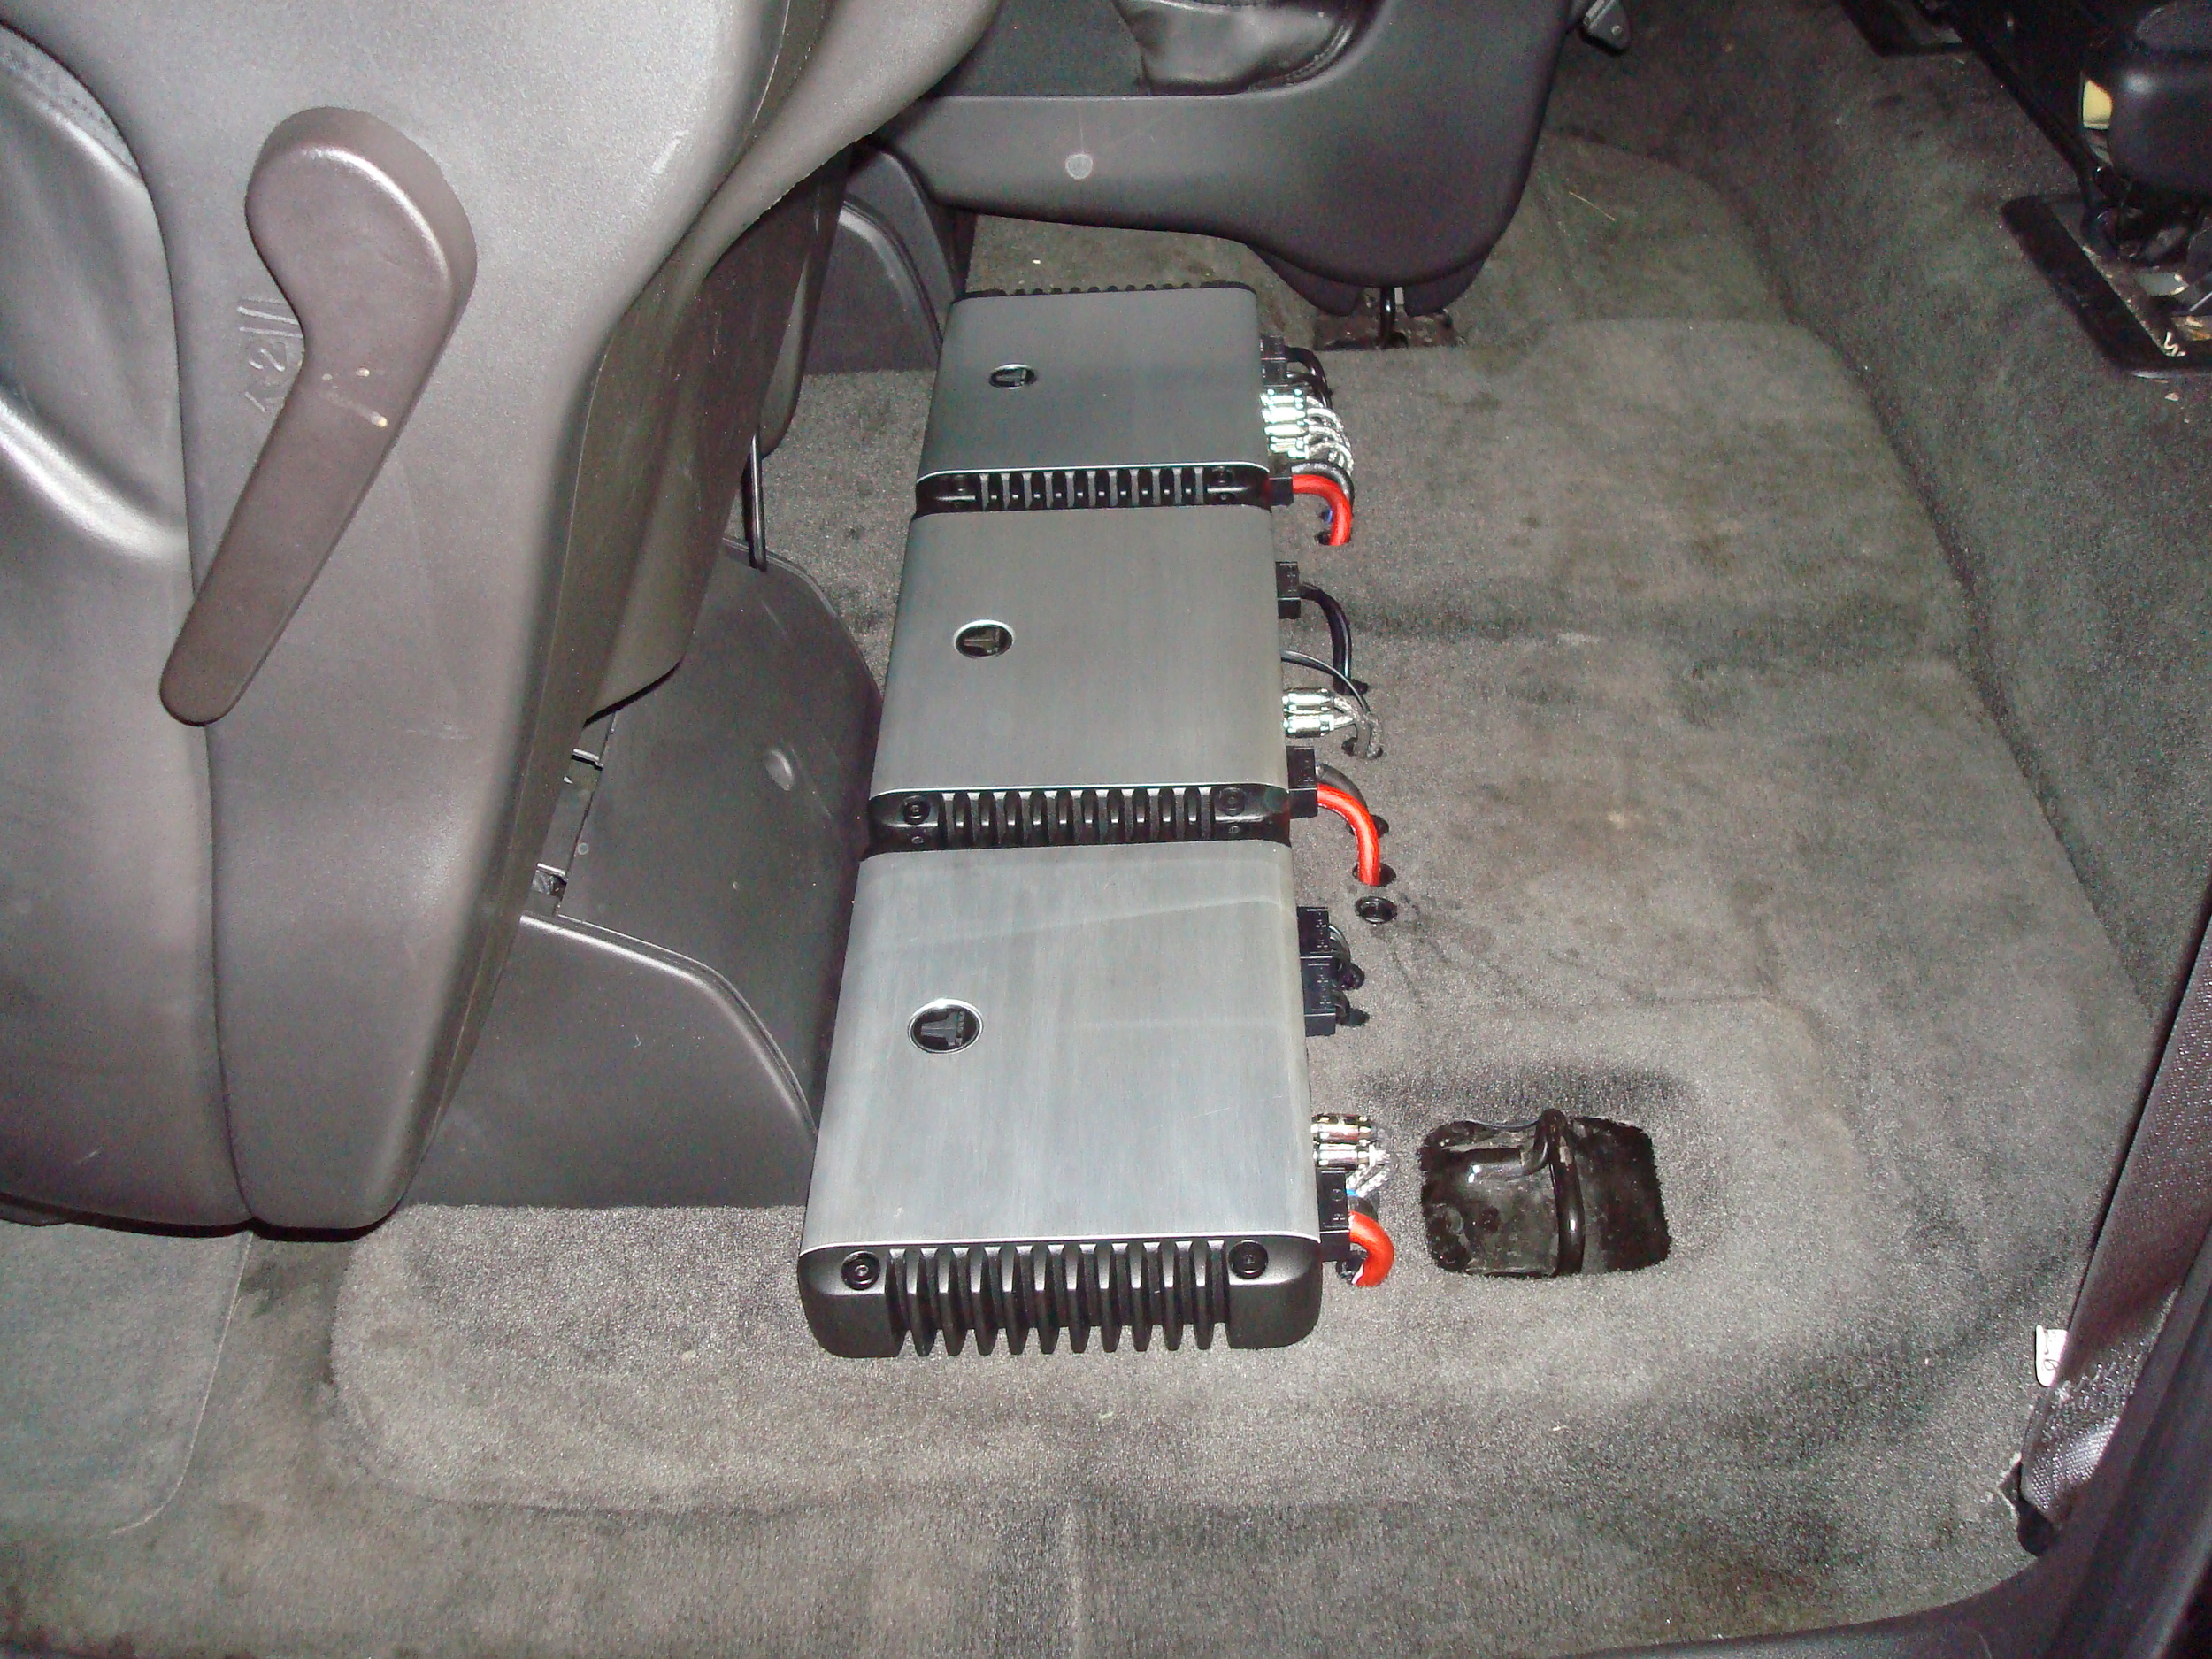 2007 Yukon Denali XL - JL Audio HD Amps completely hidden underneath the 2nd row seat